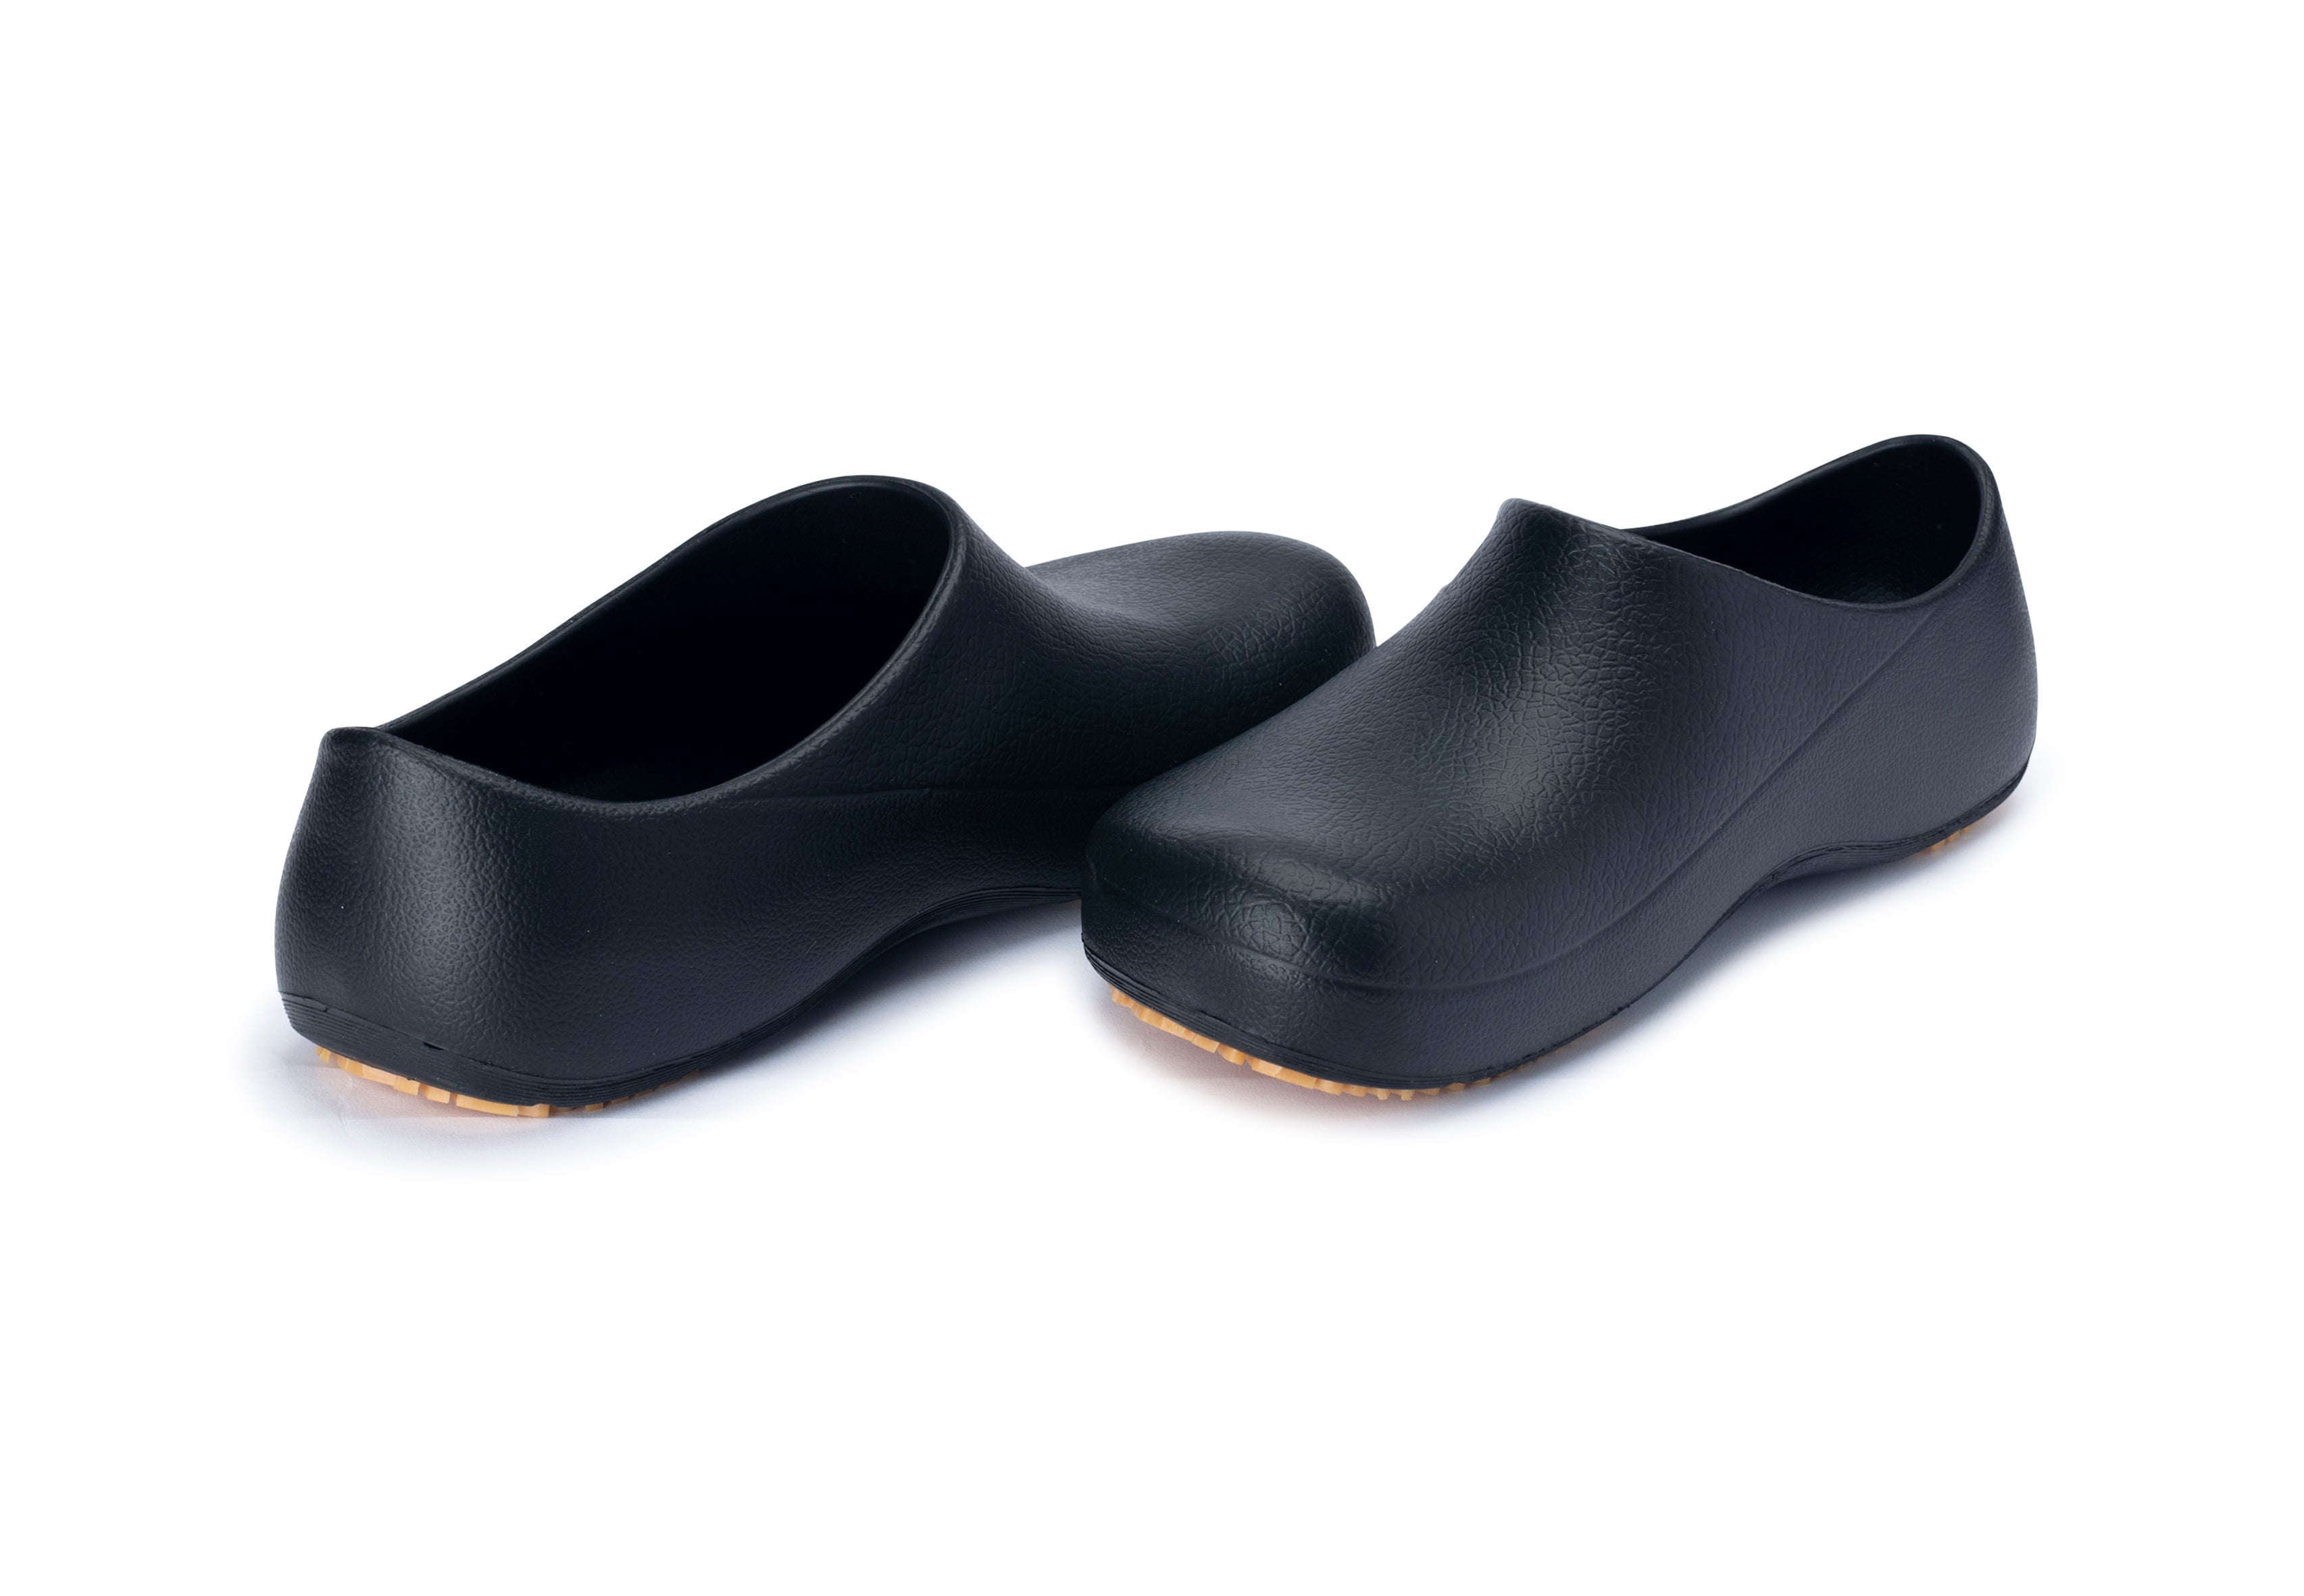 61-829 New Style Chef Shoes (SRC)-arriba-BK-JP/TW Size-1: 230-偉豐鞋 WELL SHOE HK-Well Shoe-偉豐鞋-偉豐網-荃灣鞋店-Functional shoes-Hong Kong Tsuen Wan Shoe Store-Tai Wan Shoe-Japan Shoe-高品質功能鞋-台灣進口鞋-日本進口鞋-High-quality shoes-鞋類配件-荃灣進口鞋-香港鞋店-優質鞋類產品-水靴-帆布鞋-廚師鞋-香港鞋品牌-Hong Kong Shoes brand-長者鞋-Hong Kong Rain Boots-Kitchen shoes-Cruthes-Slipper-Well Shoe Hong Kong-Anello-Arriba-休閒鞋-舒適鞋-健康鞋-皮鞋-Healthy shoes-Leather shoes-Hiking shoes